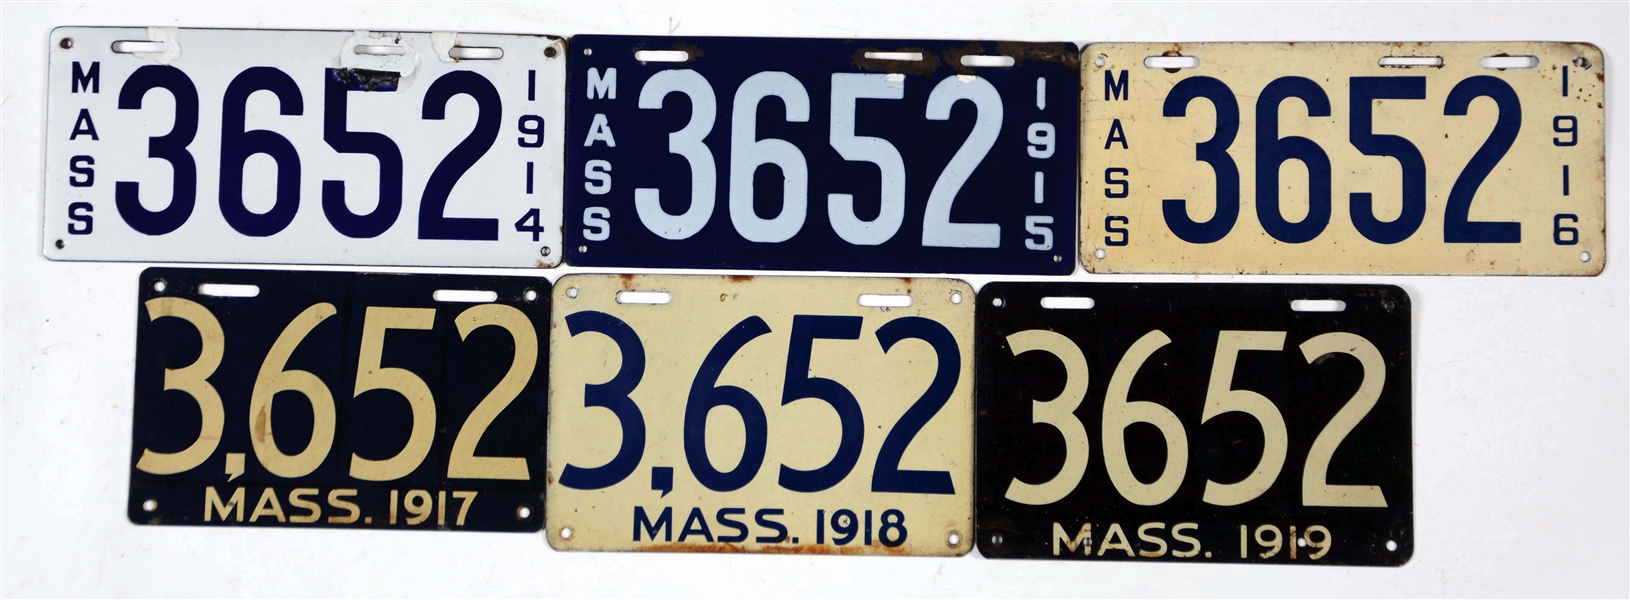 LOT OF 42: MASSACHUSETTS NO. 3652 LICENSE PLATES, 1914-1964.